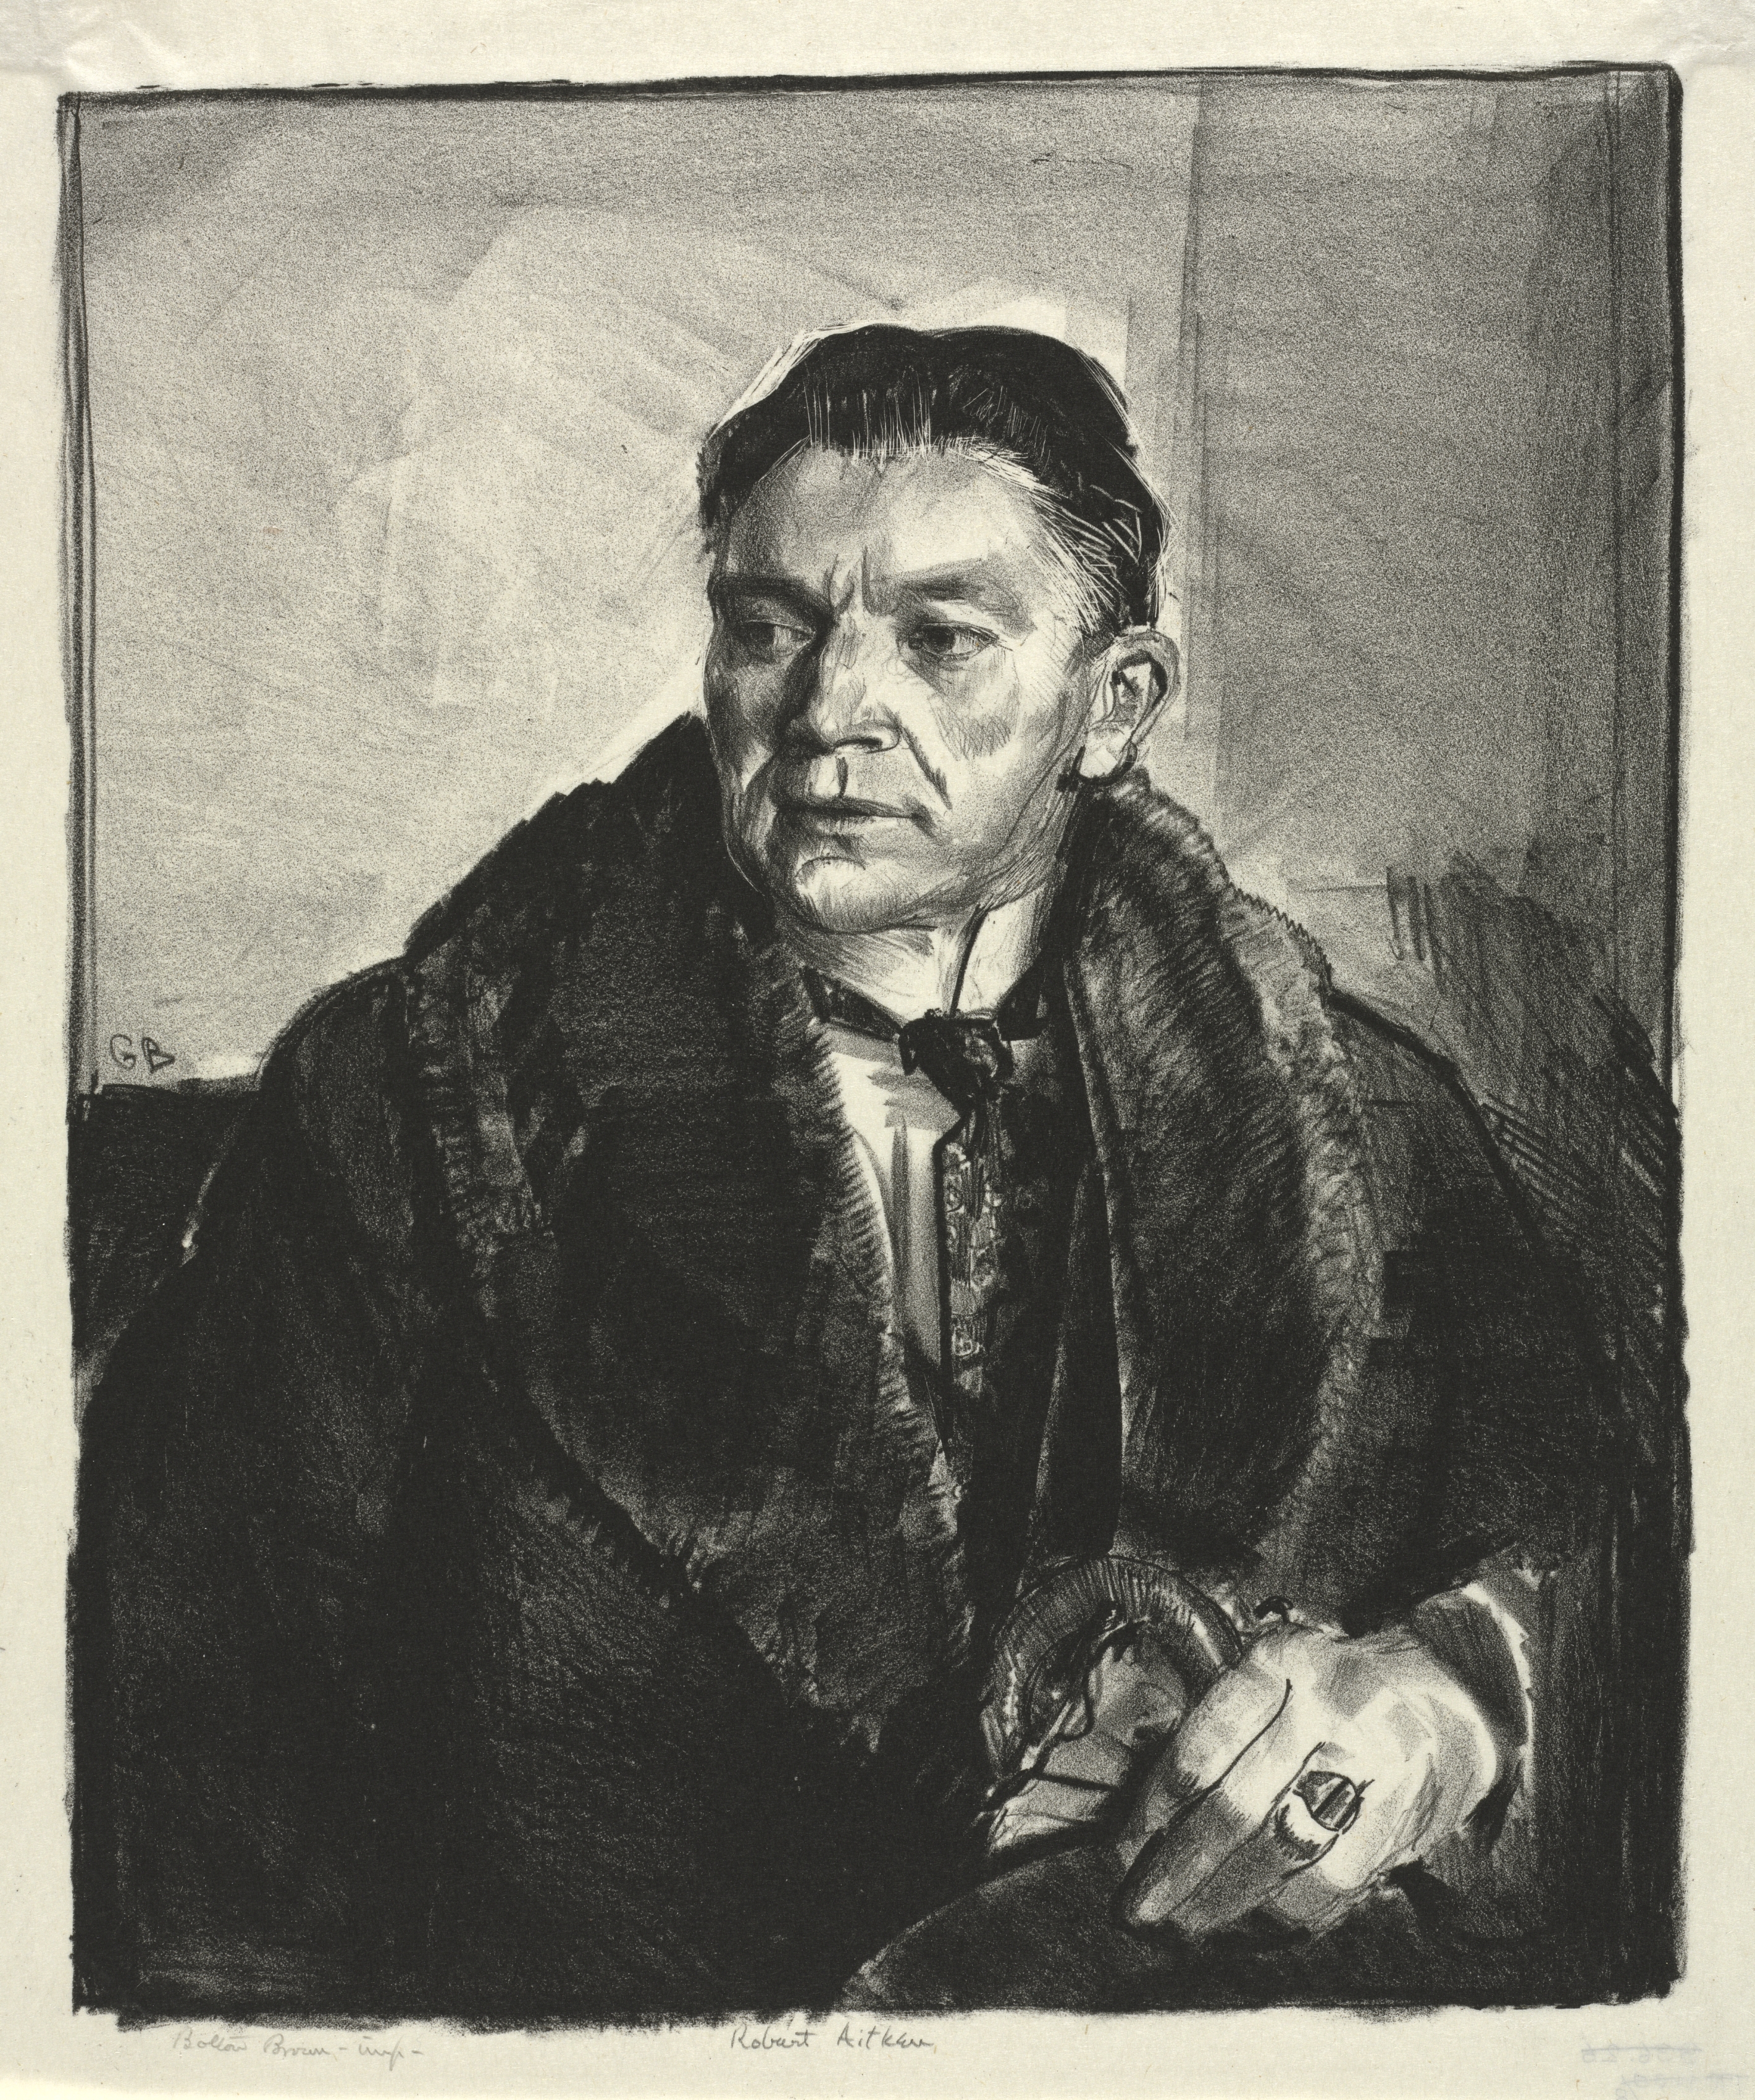 Portrait of Robert Aitken, Second Stone